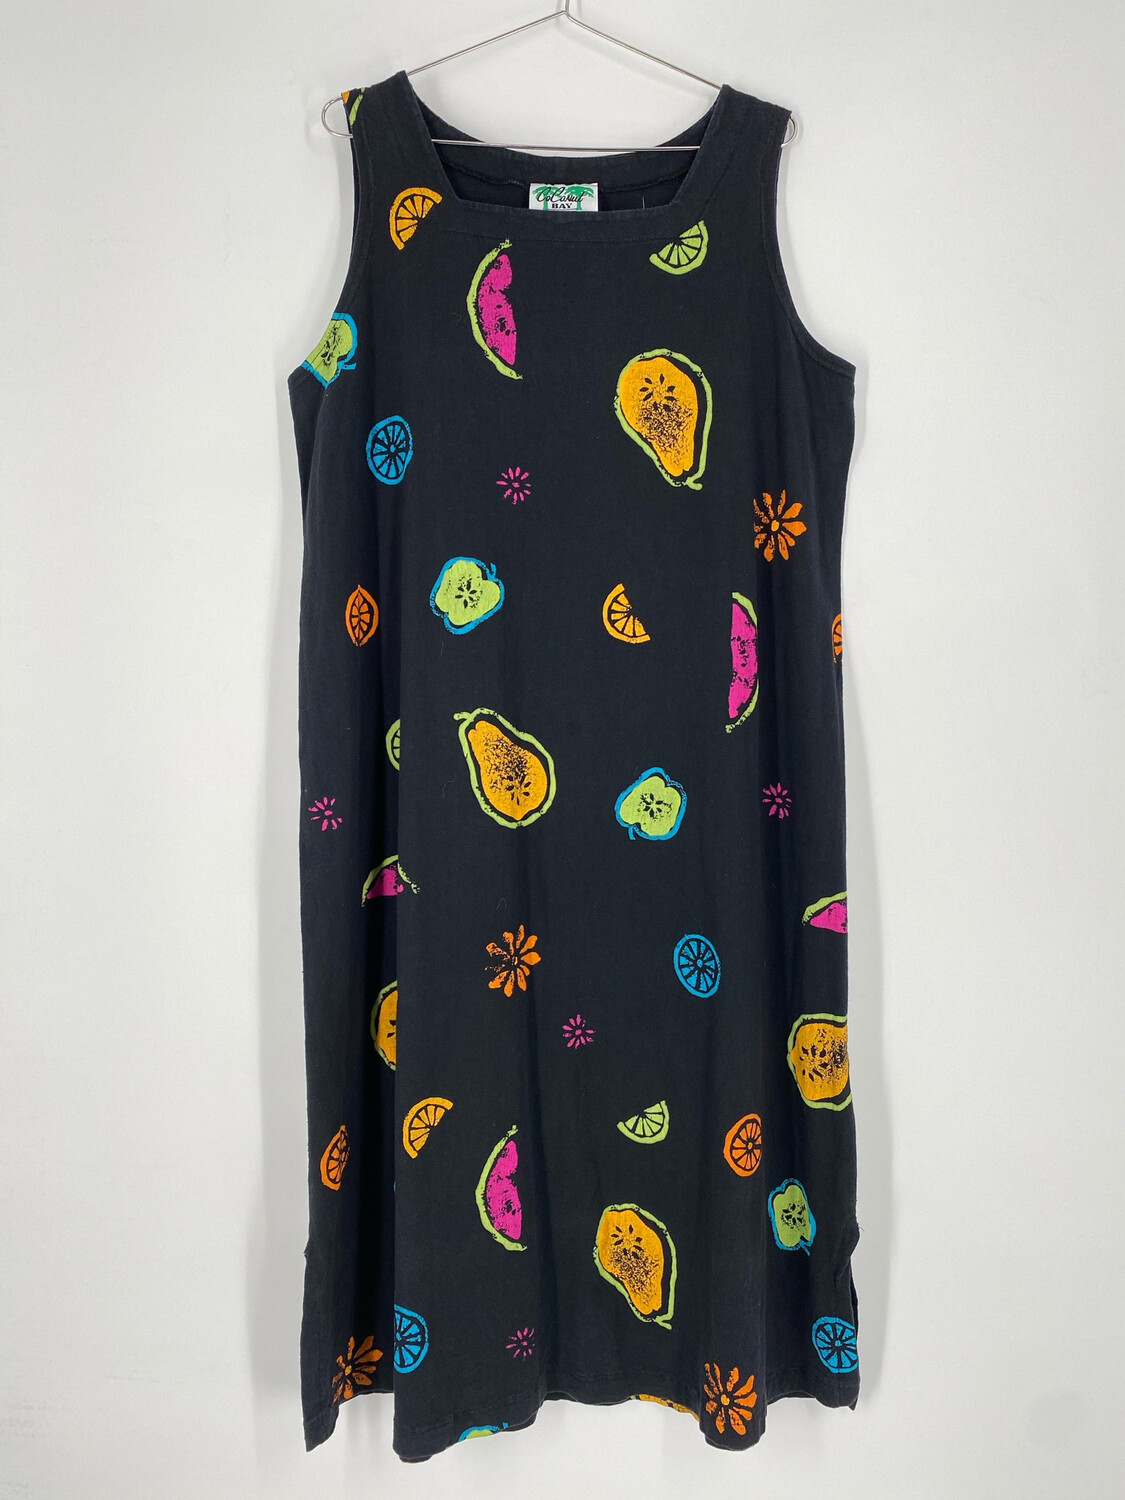 CoConut Bay Fruits Dress Size 1X